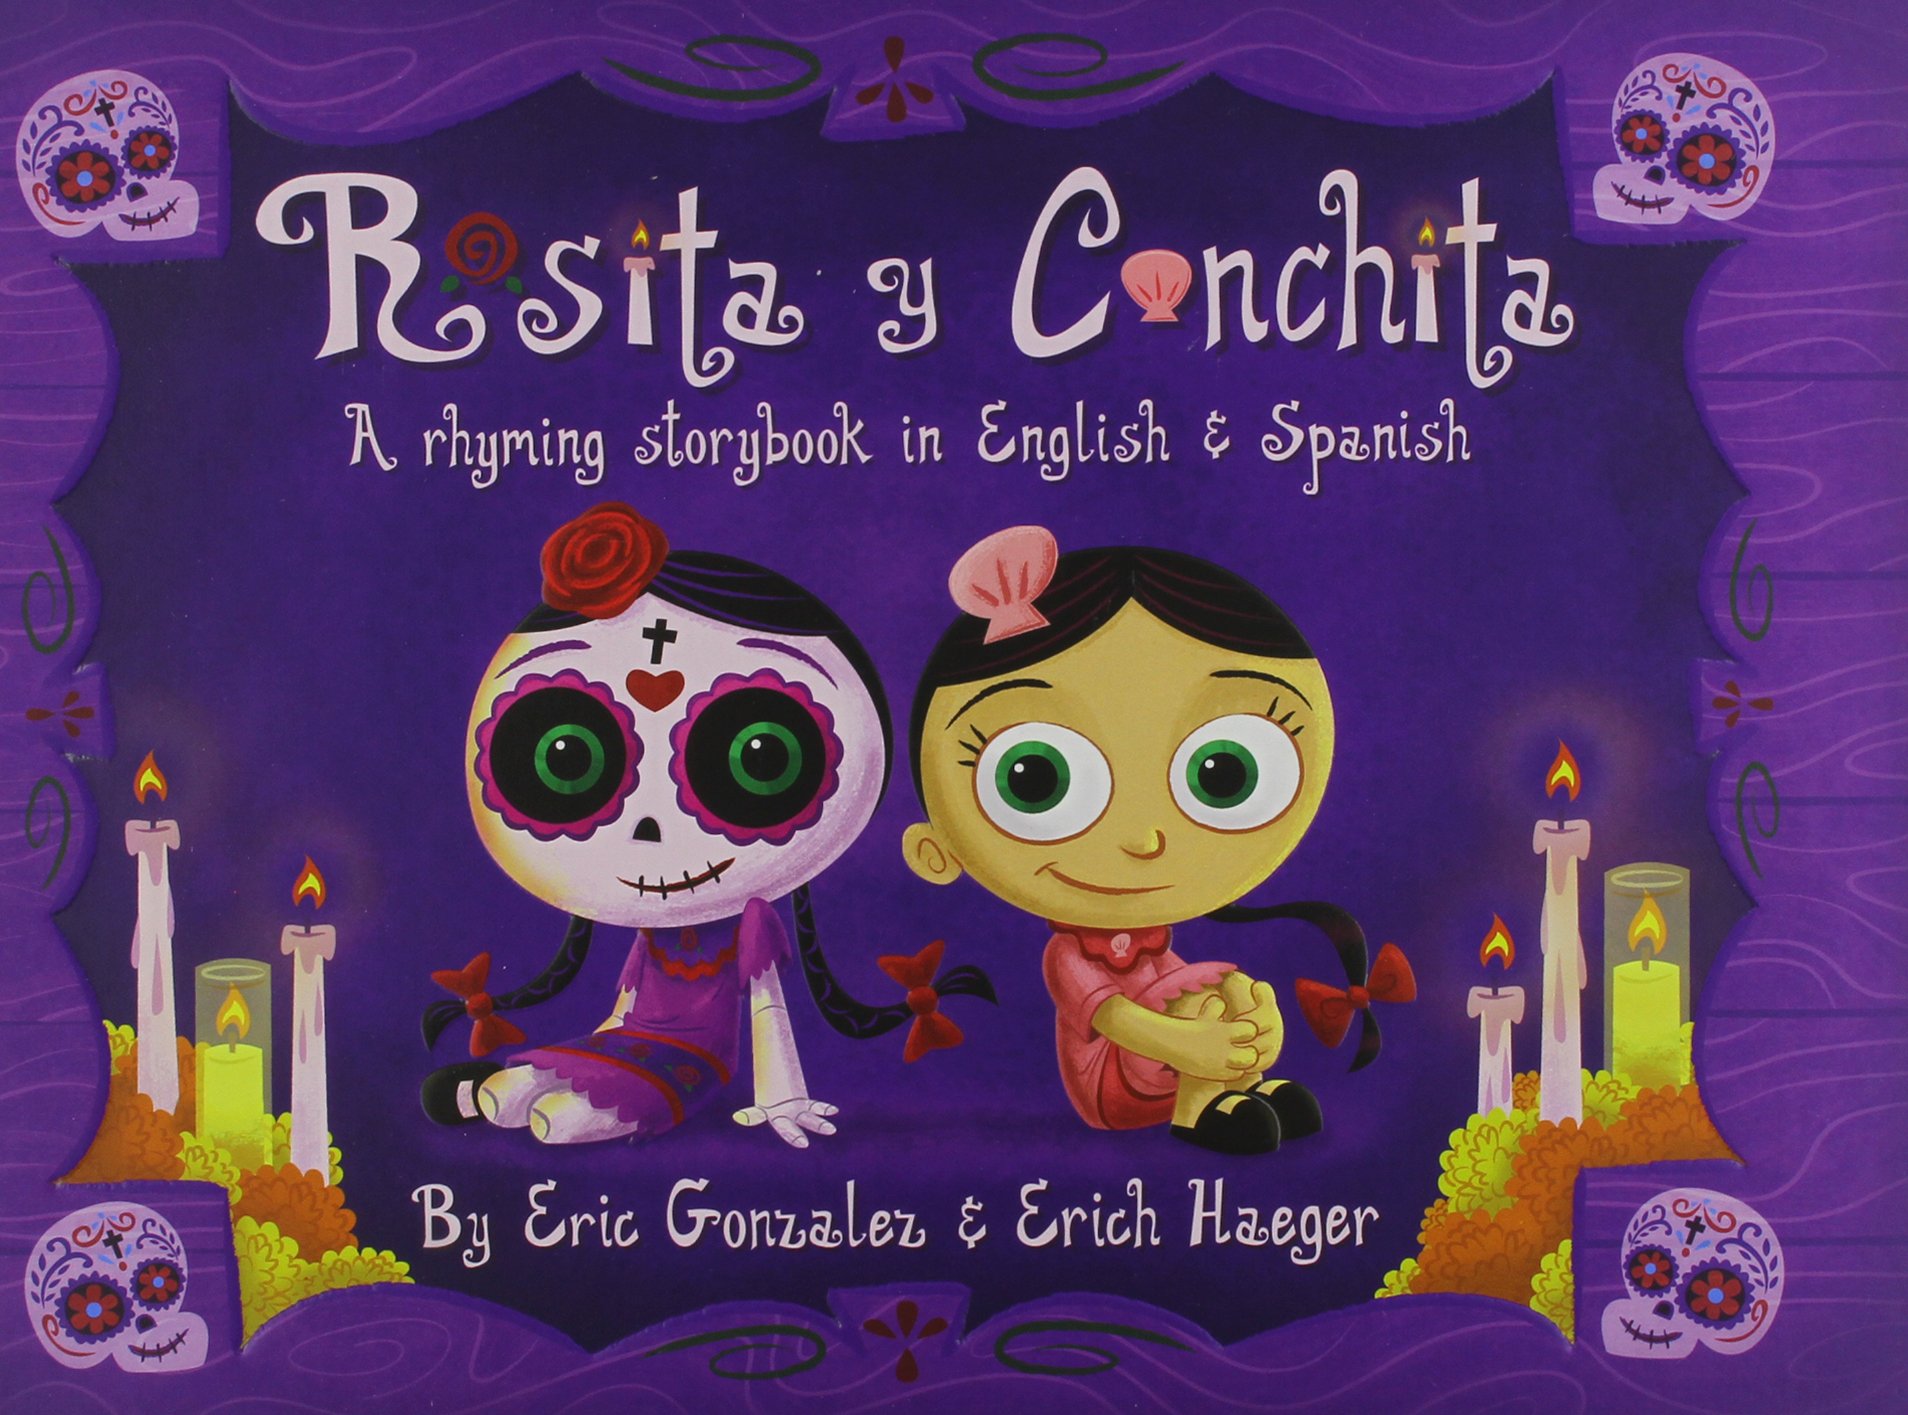 Rosita Y Conchita by Eric Gonzales and Erich Haegar book cover